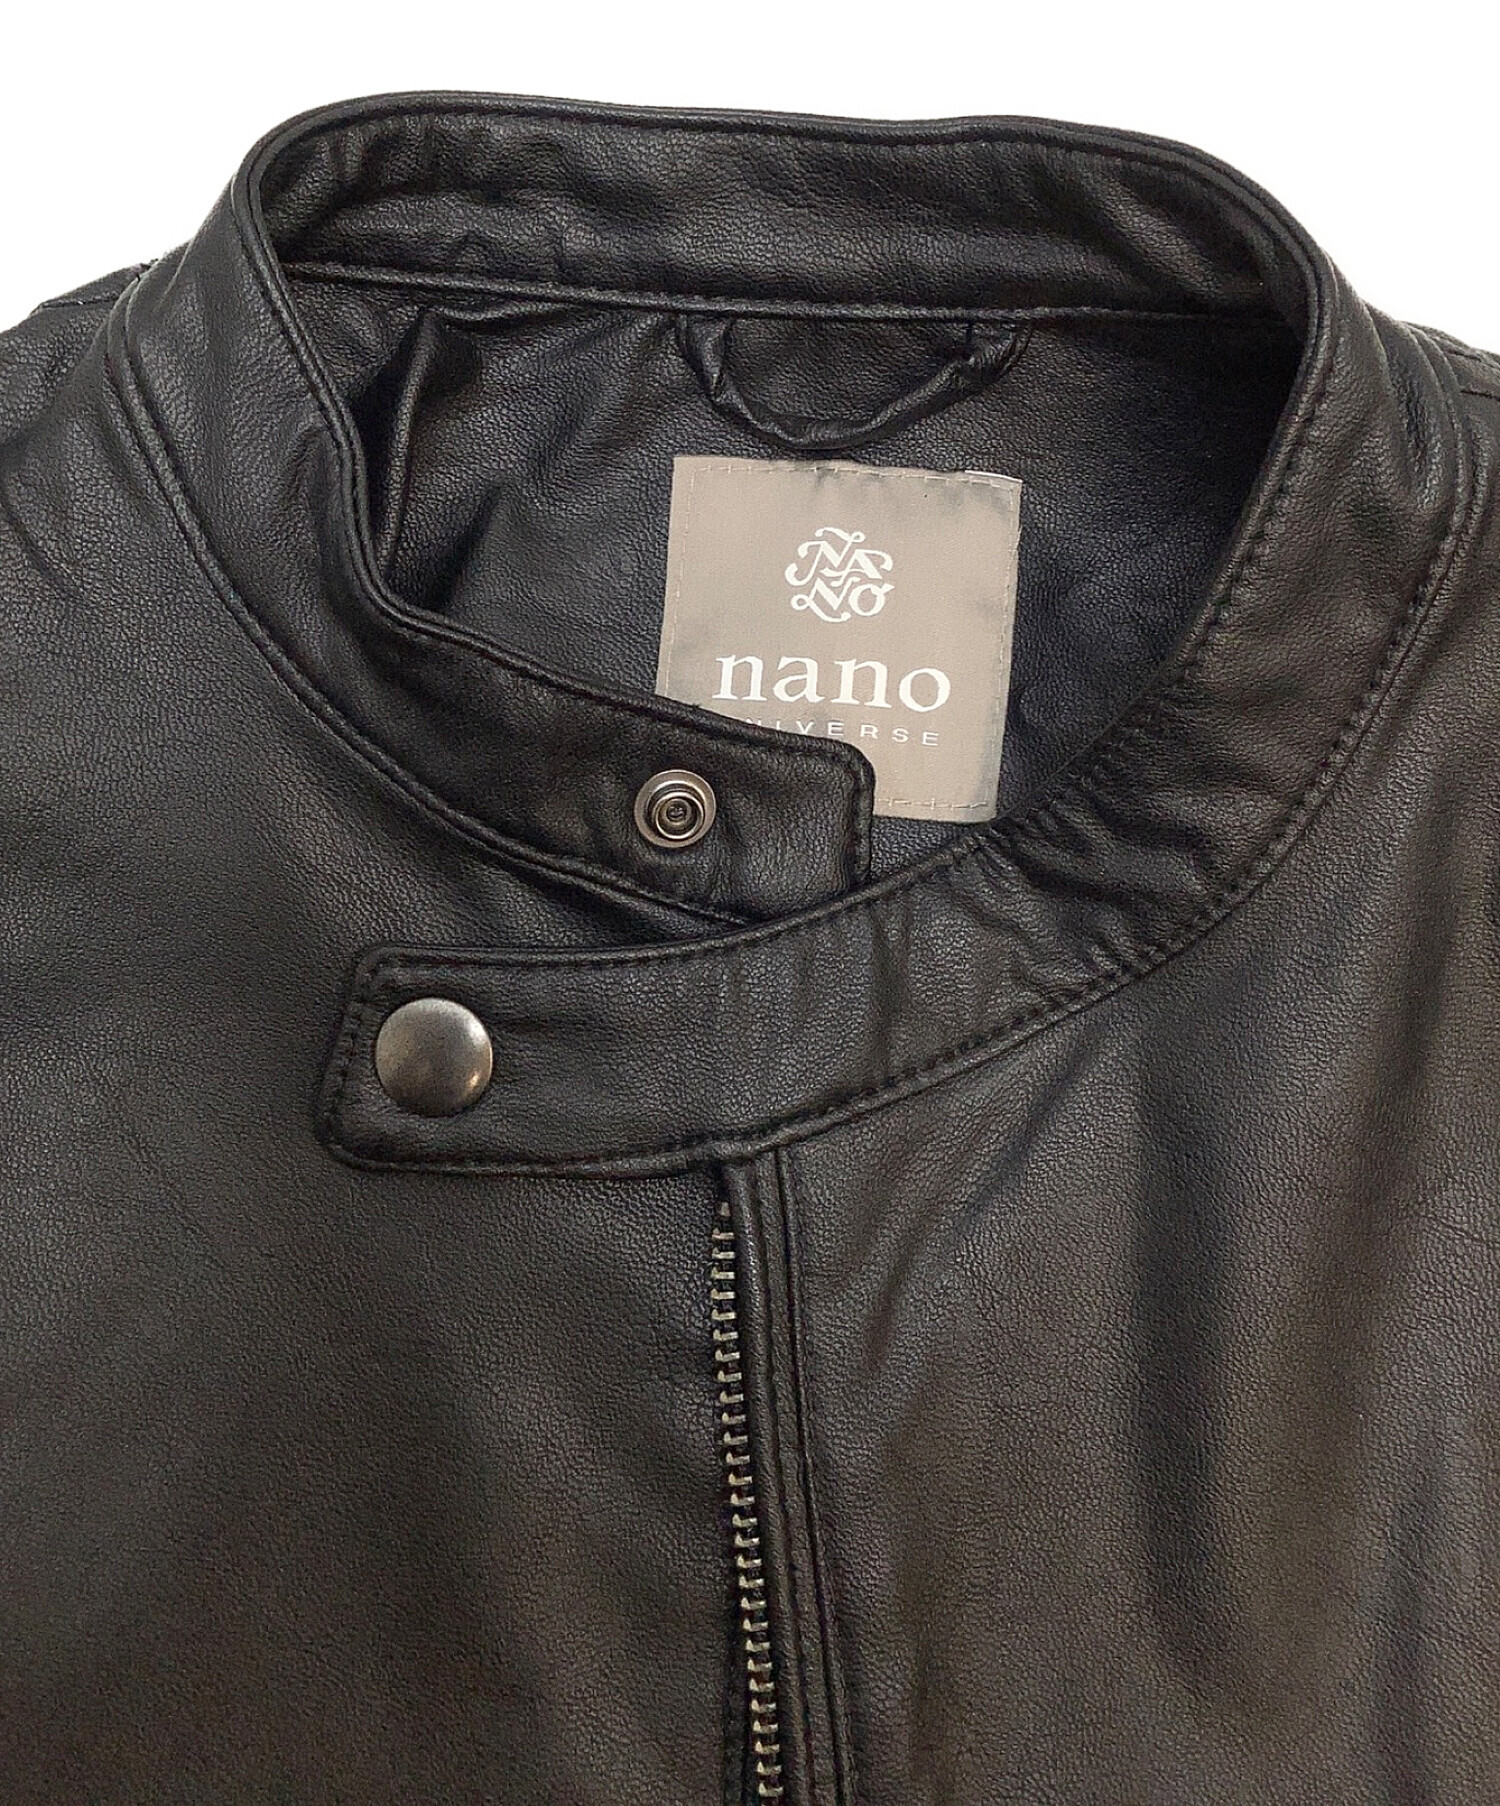 nano・universe (ナノ・ユニバース) フェイクレザージャケット ブラック サイズ:S